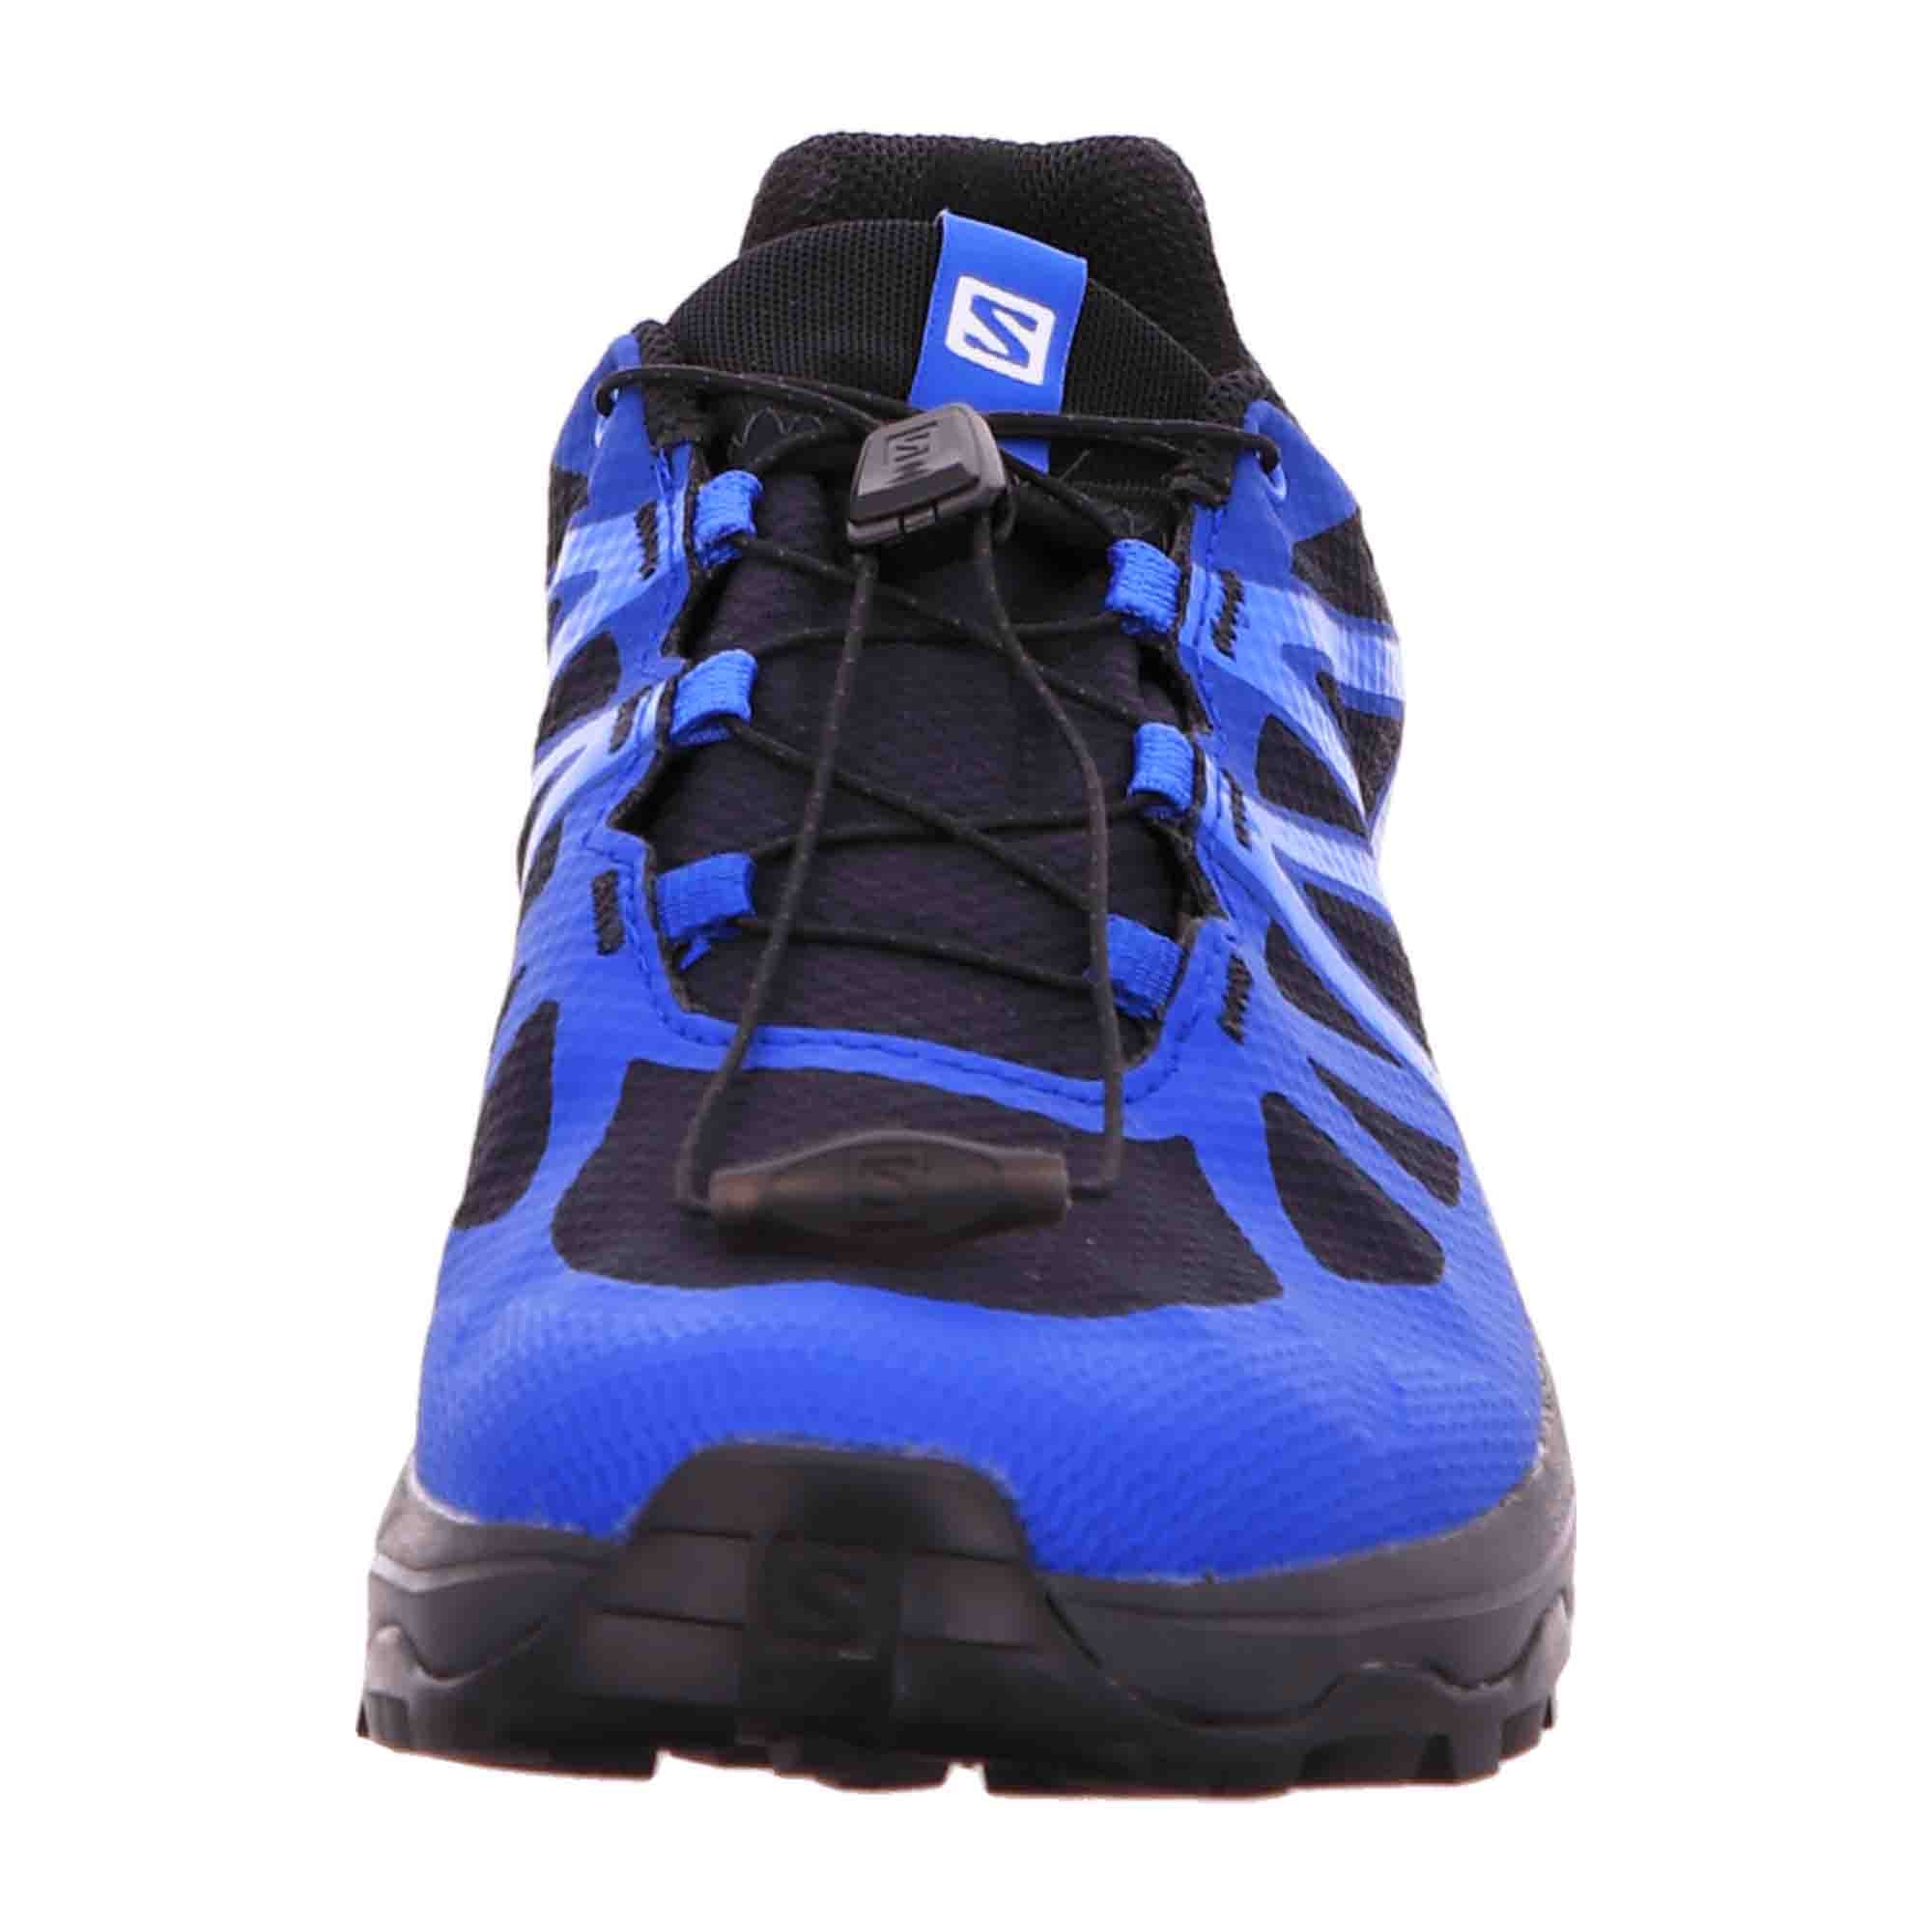 Salomon shoes XA SIWA GTX Nisk/Turquoise for men, blue